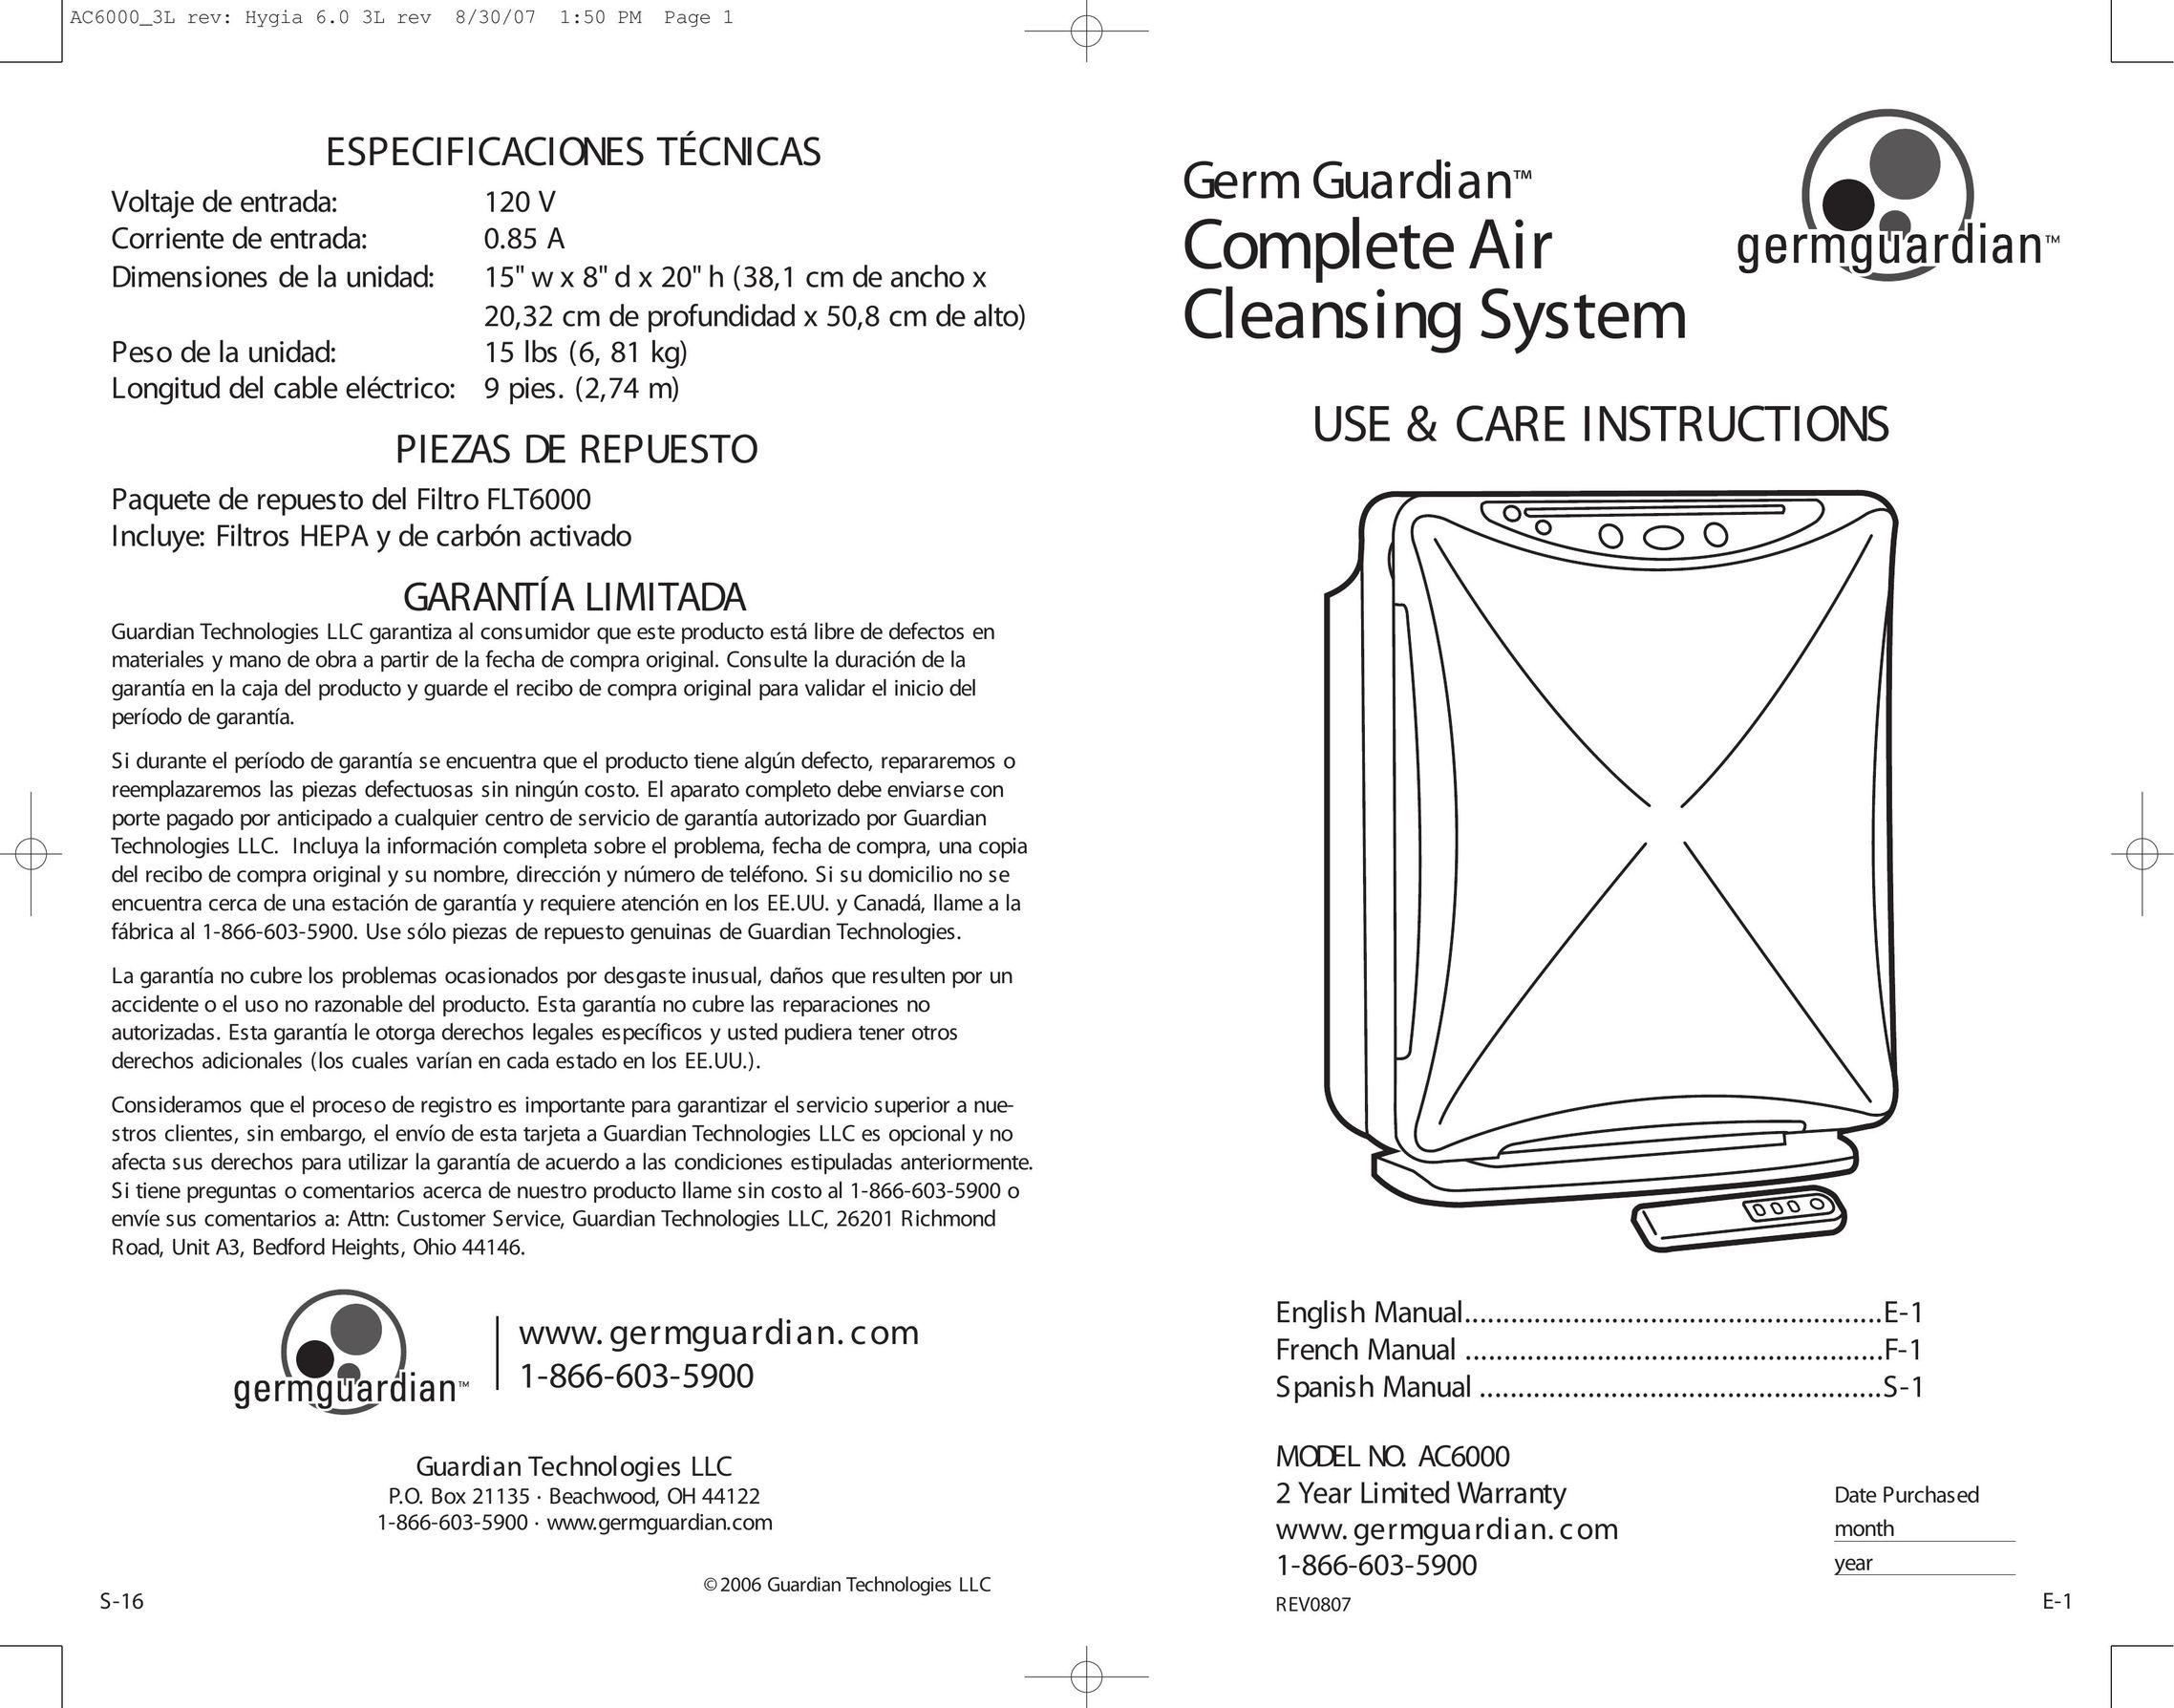 Guardian Technologies AC6000 Air Cleaner User Manual